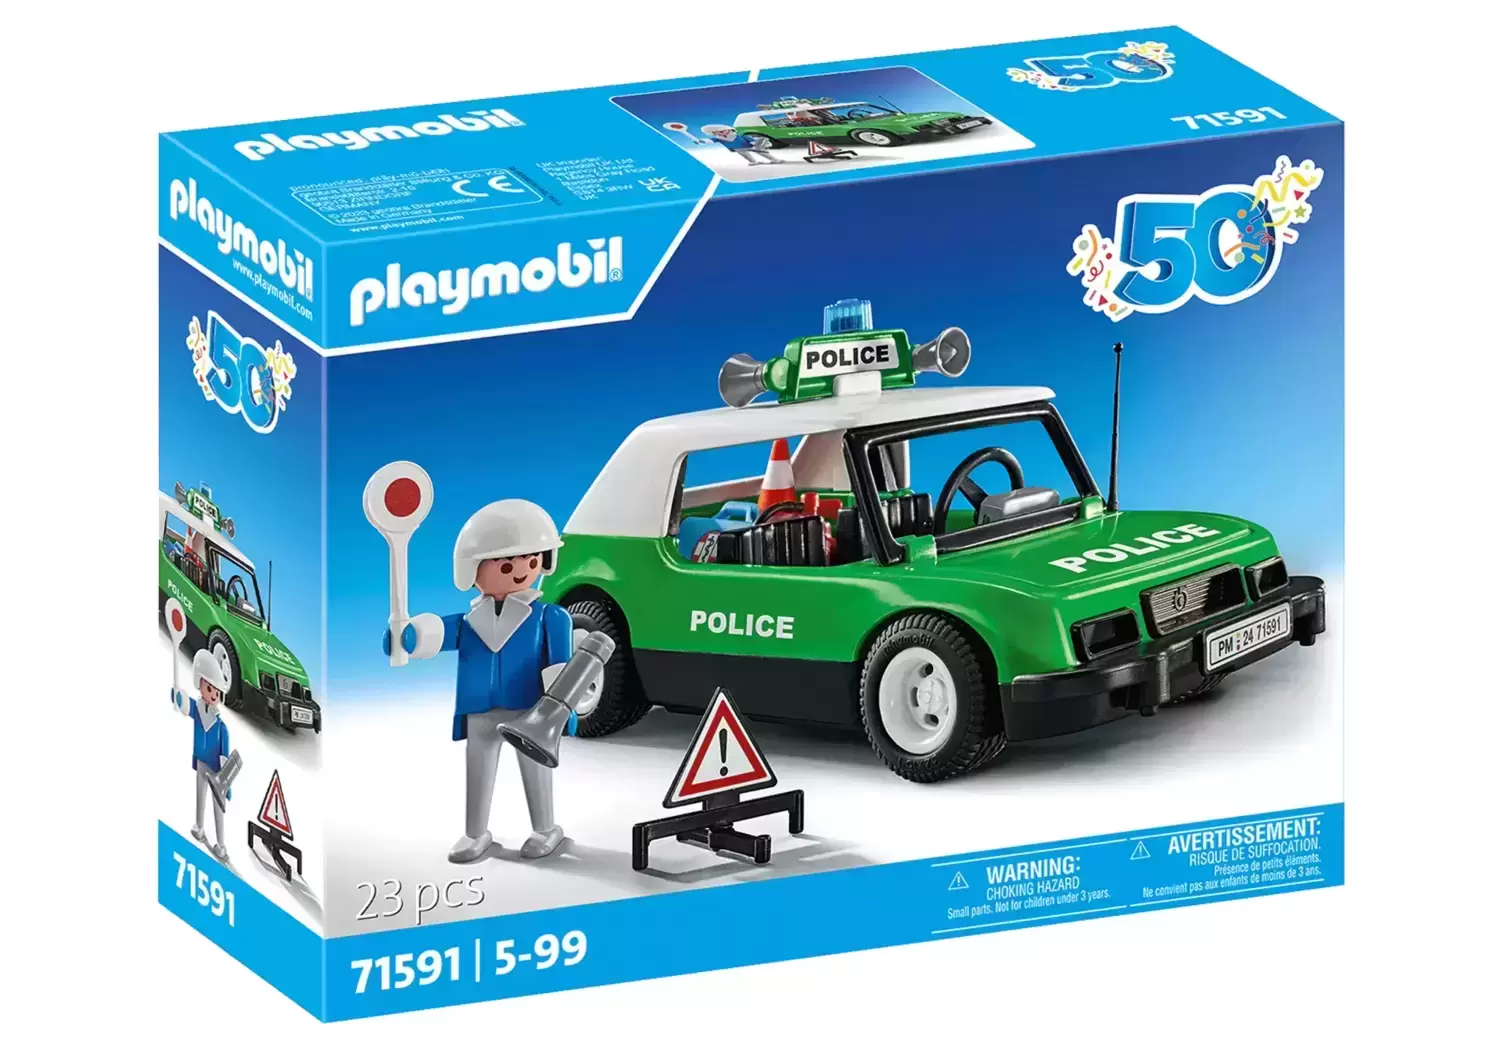 Police Playmobil - Classic Police Car